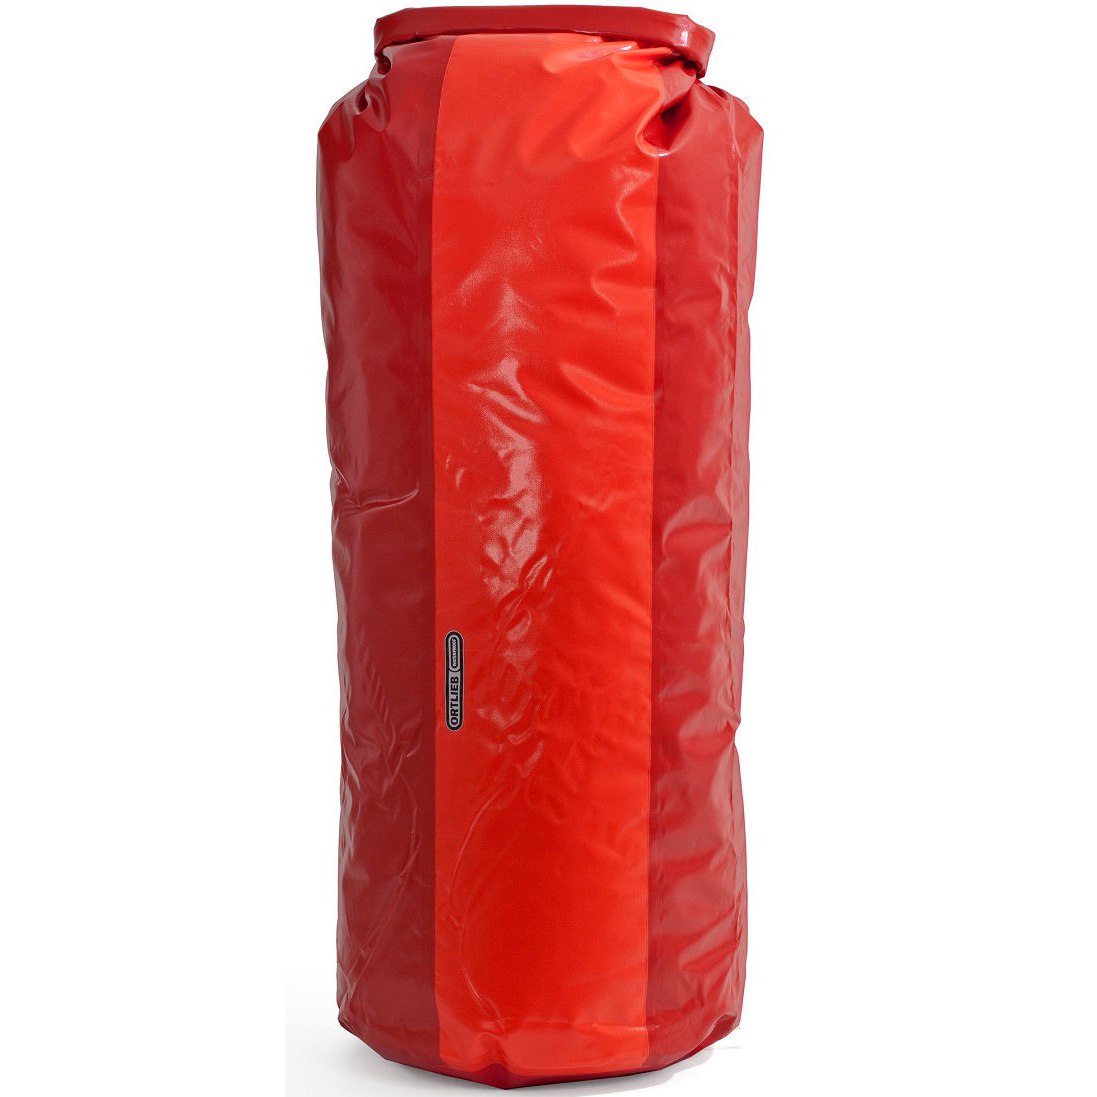 Produktbild von ORTLIEB Dry-Bag PD350 - 79L Packsack - cranberry-signal red